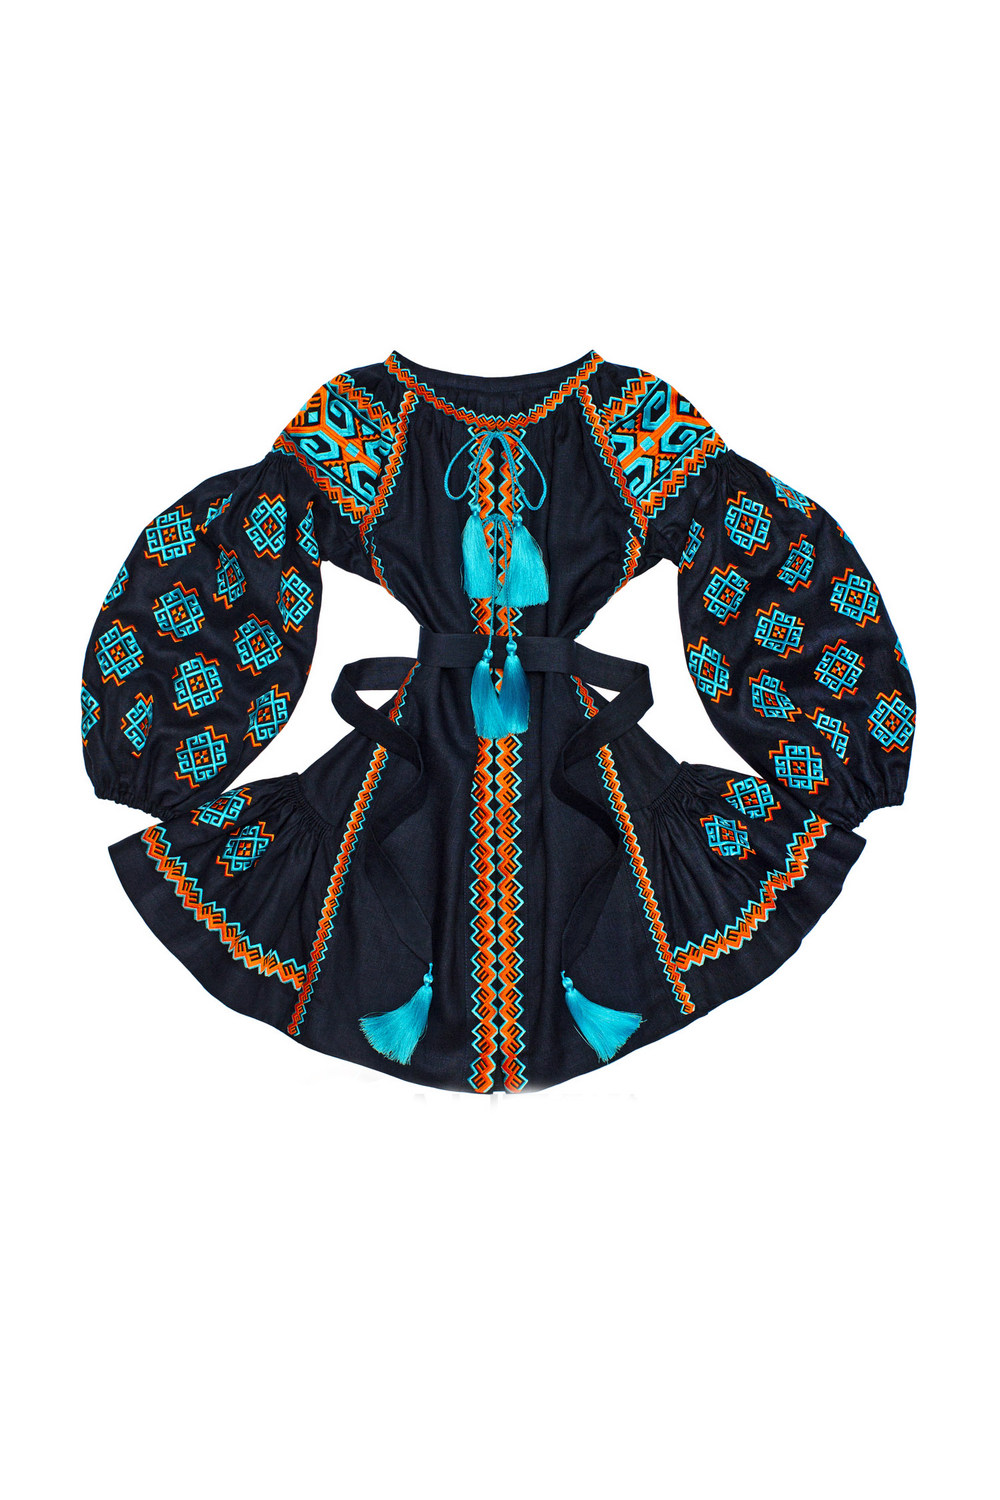 Buy Сomfortable Folk Festival Linen Blue Ukrainian Vyshyvanka dress, Boho Hippie embroidered clothes